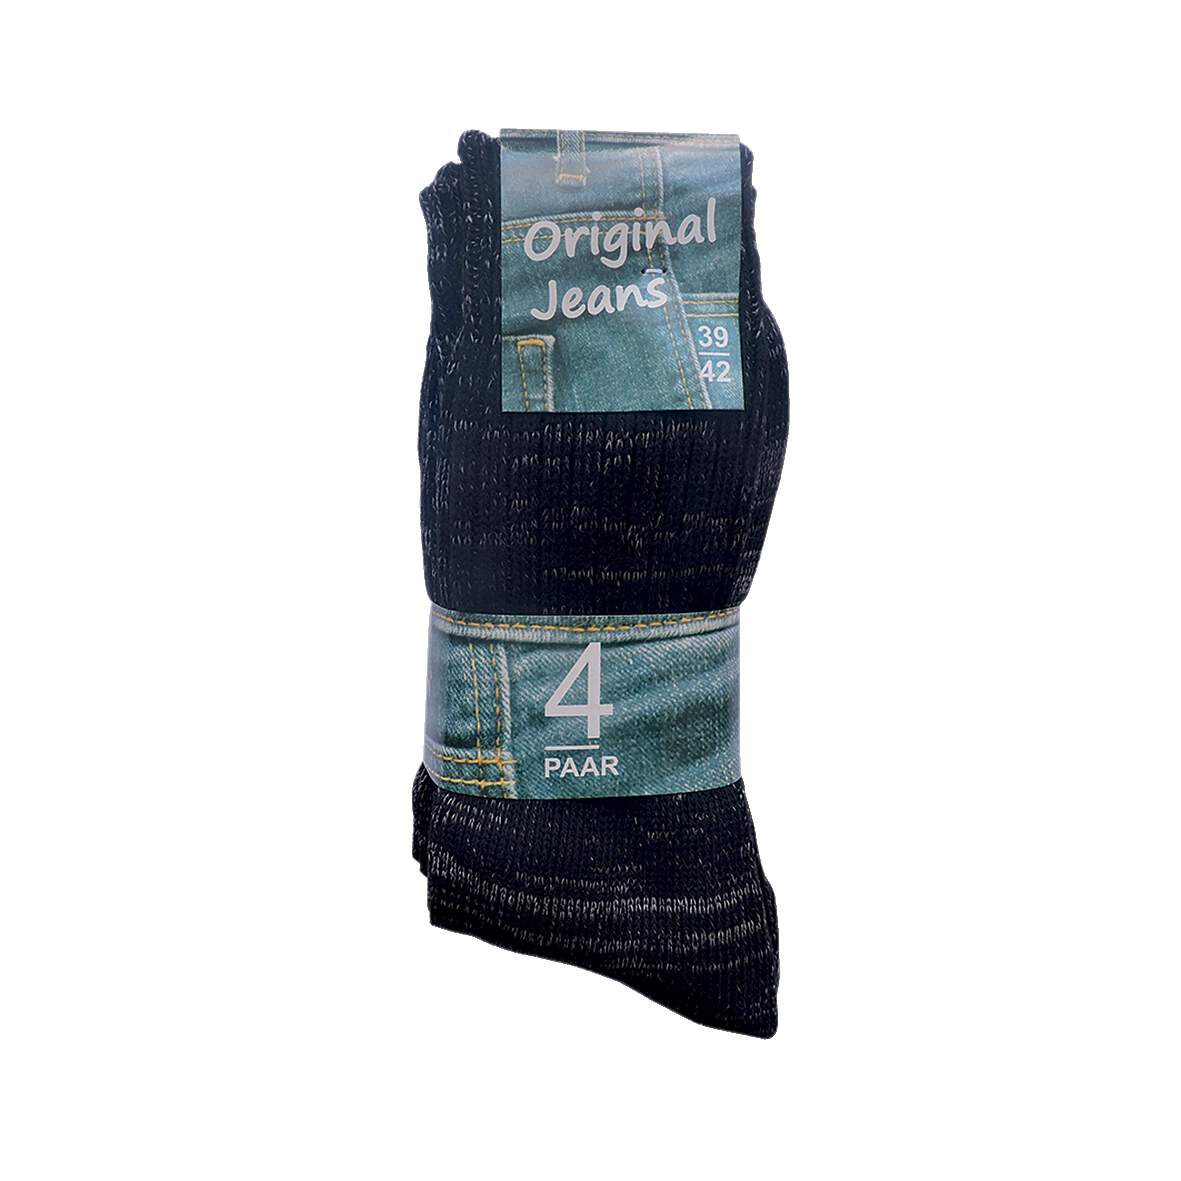 1177696 - Socken Original Jeans 5er